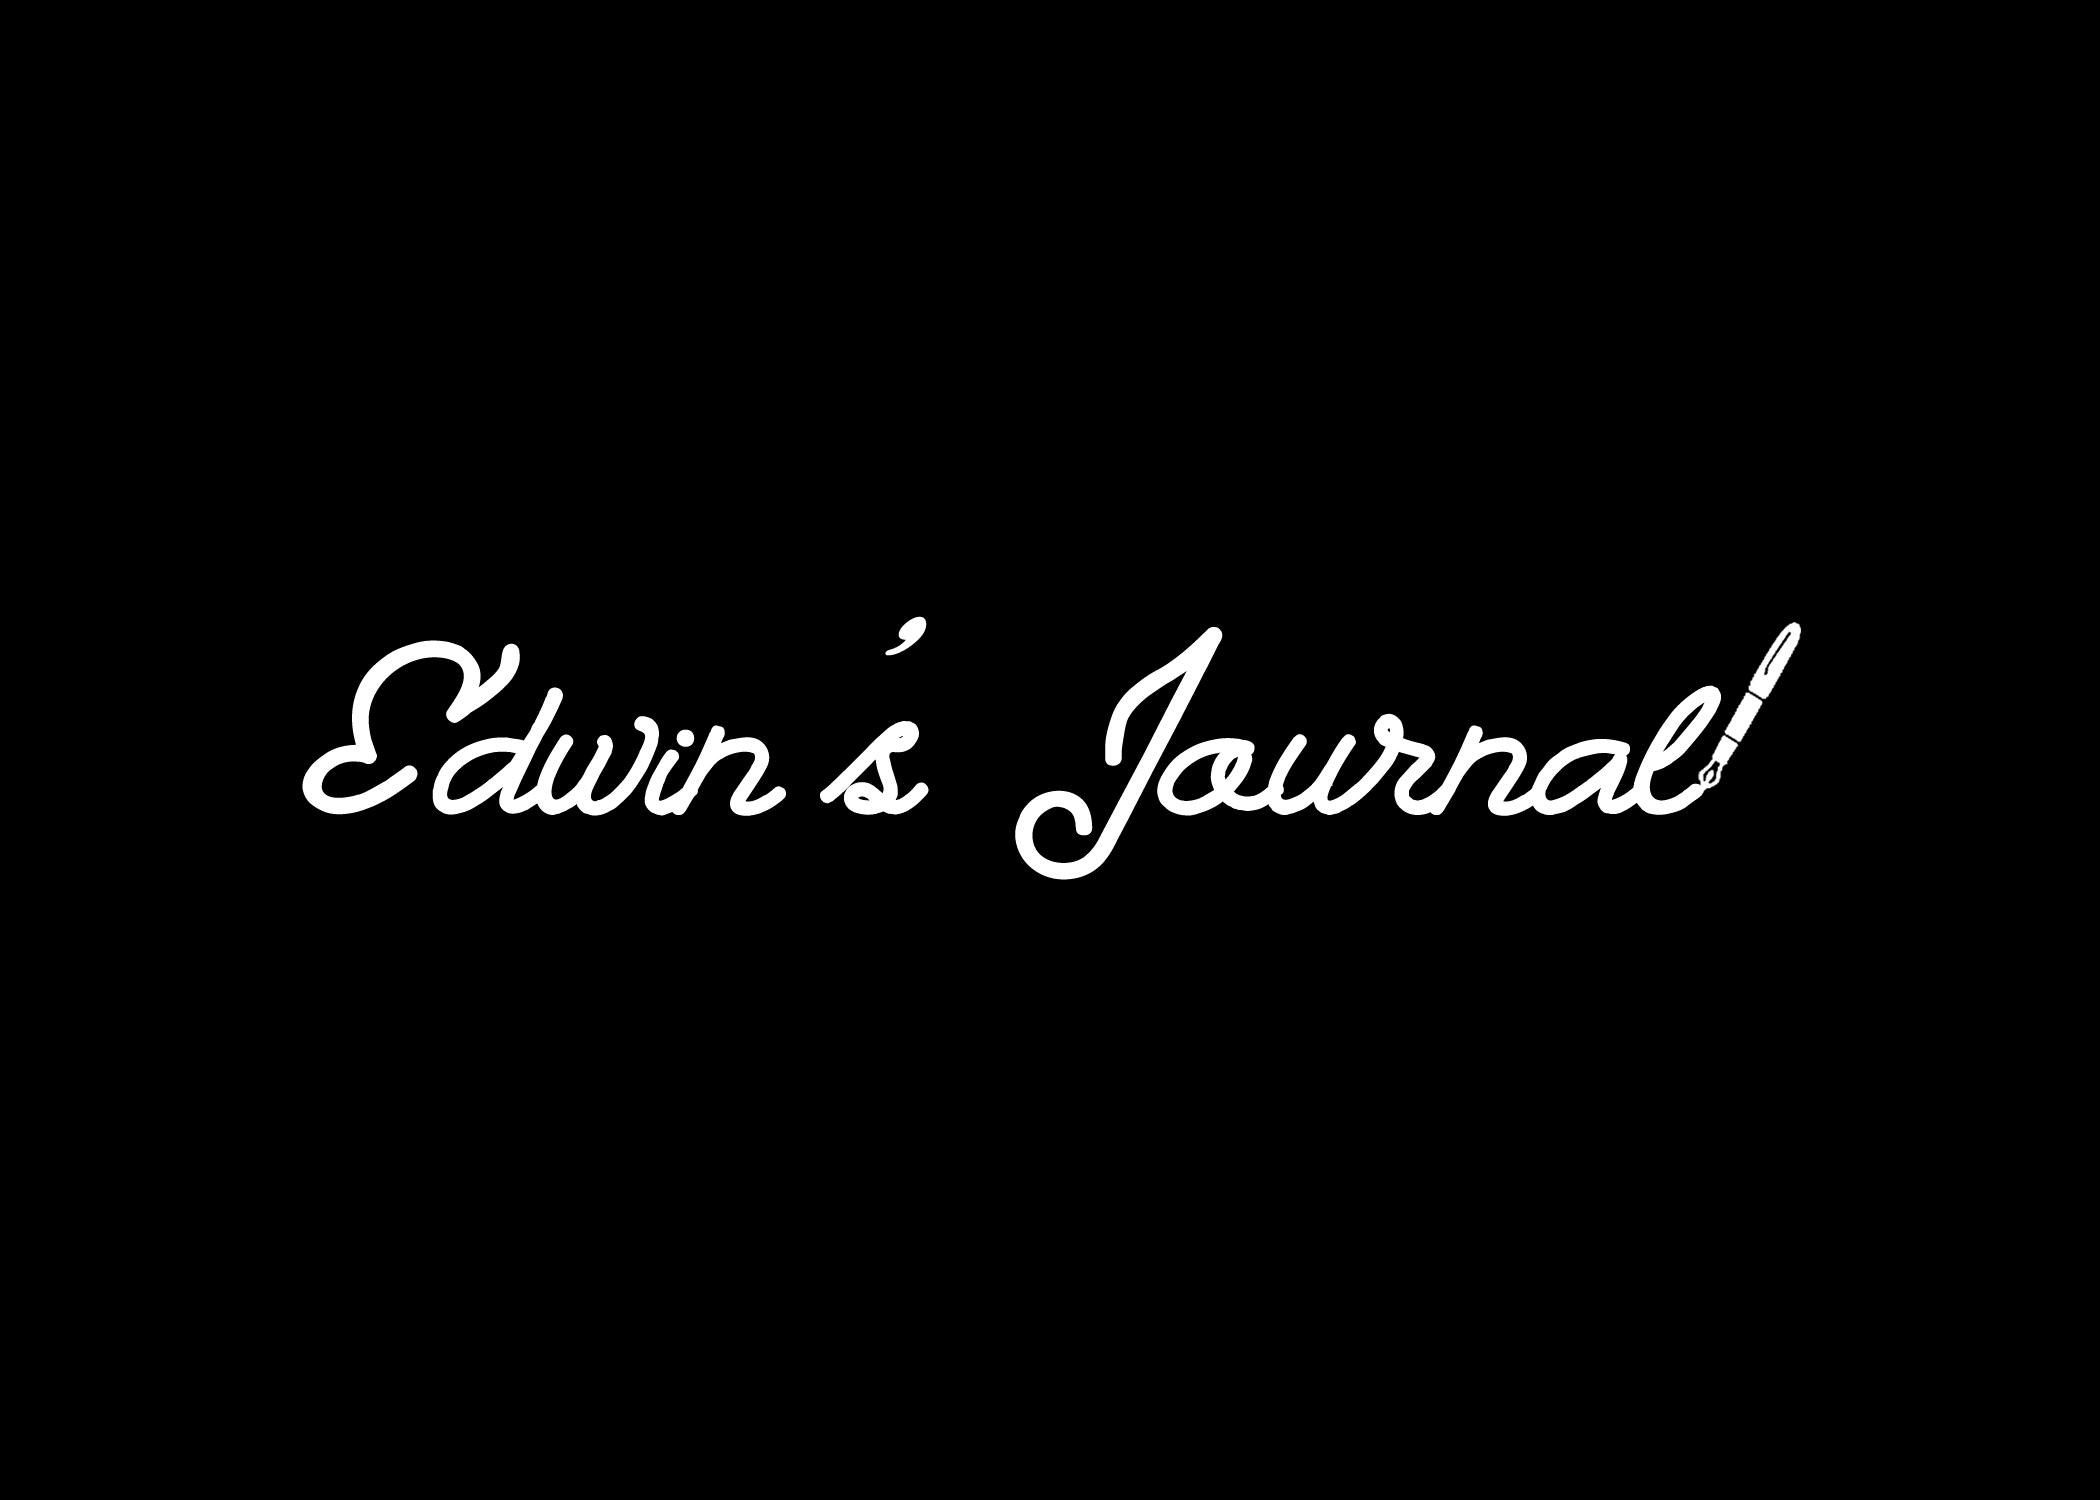 Edwin's Journal logo